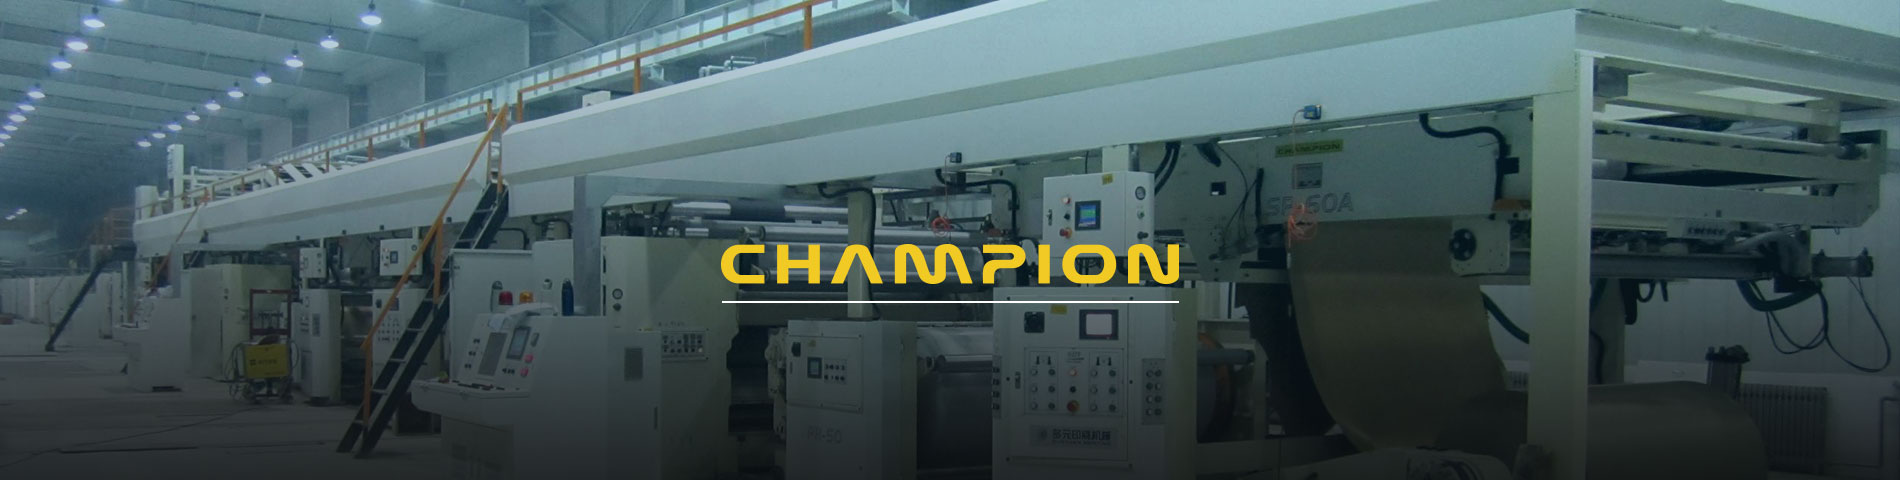 Champion Corrugated is a Professional Corrugated Cardboard Equipment Manufacturer